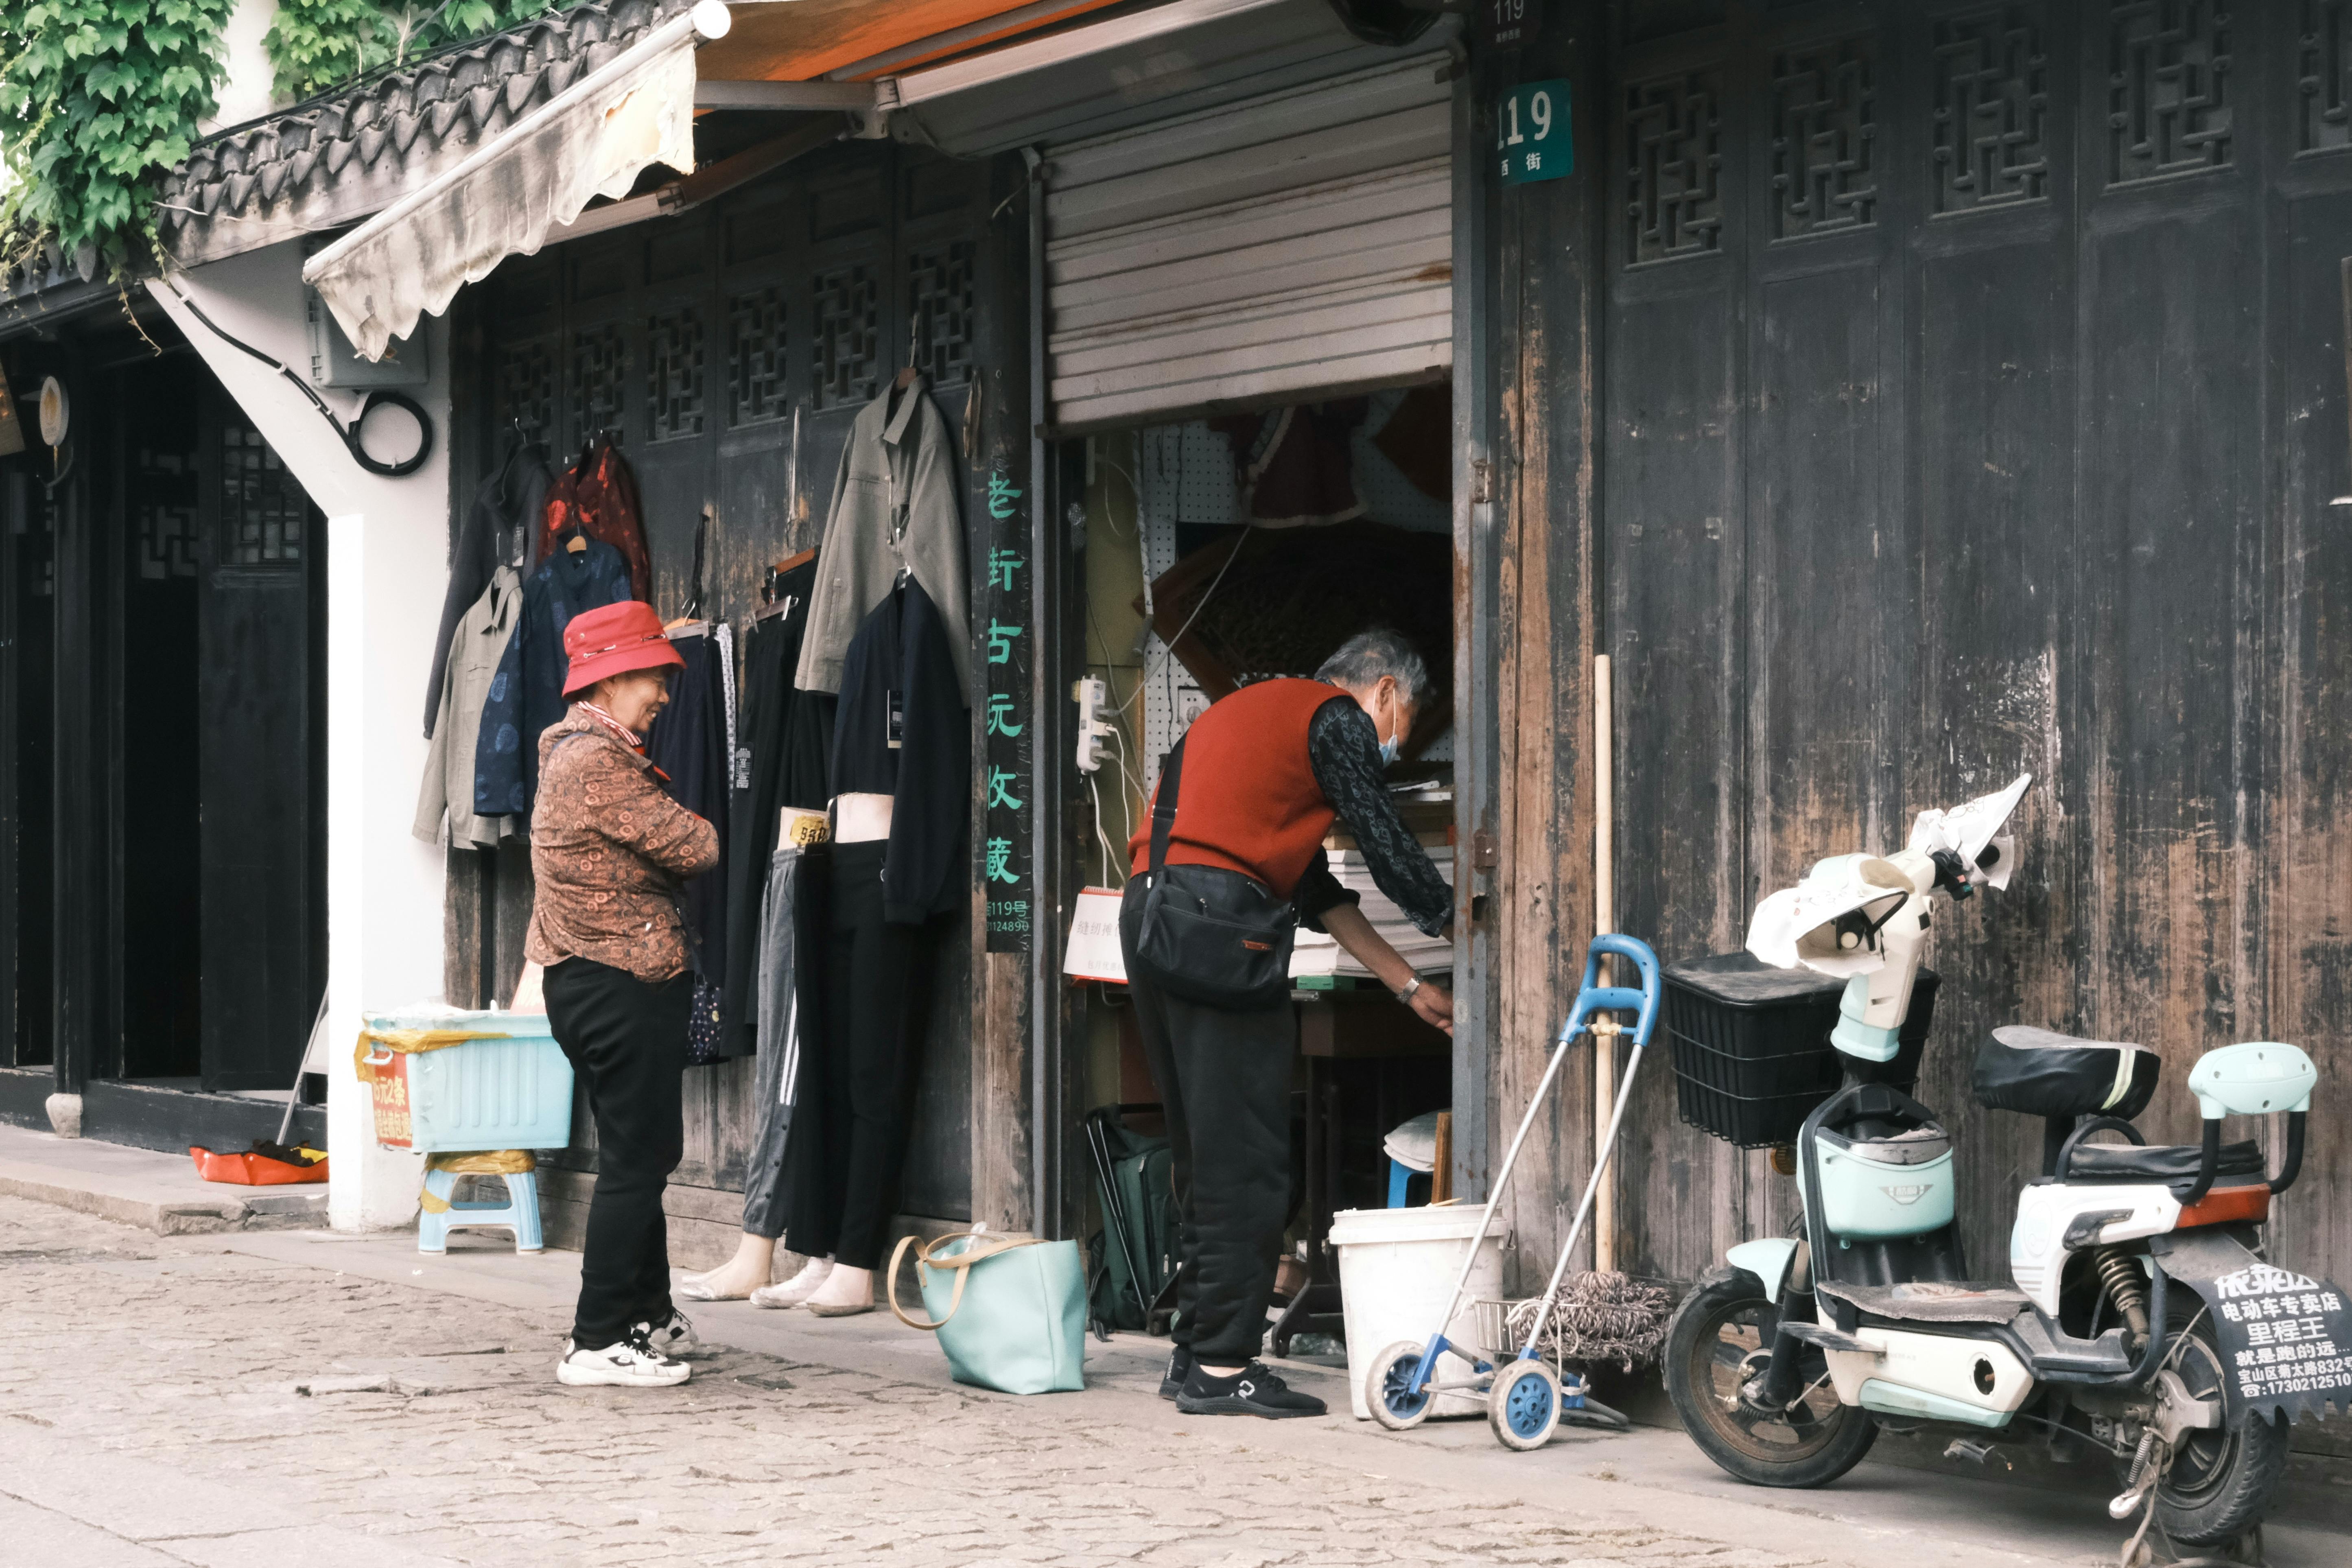 Bazaar in Turkey · Free Stock Photo